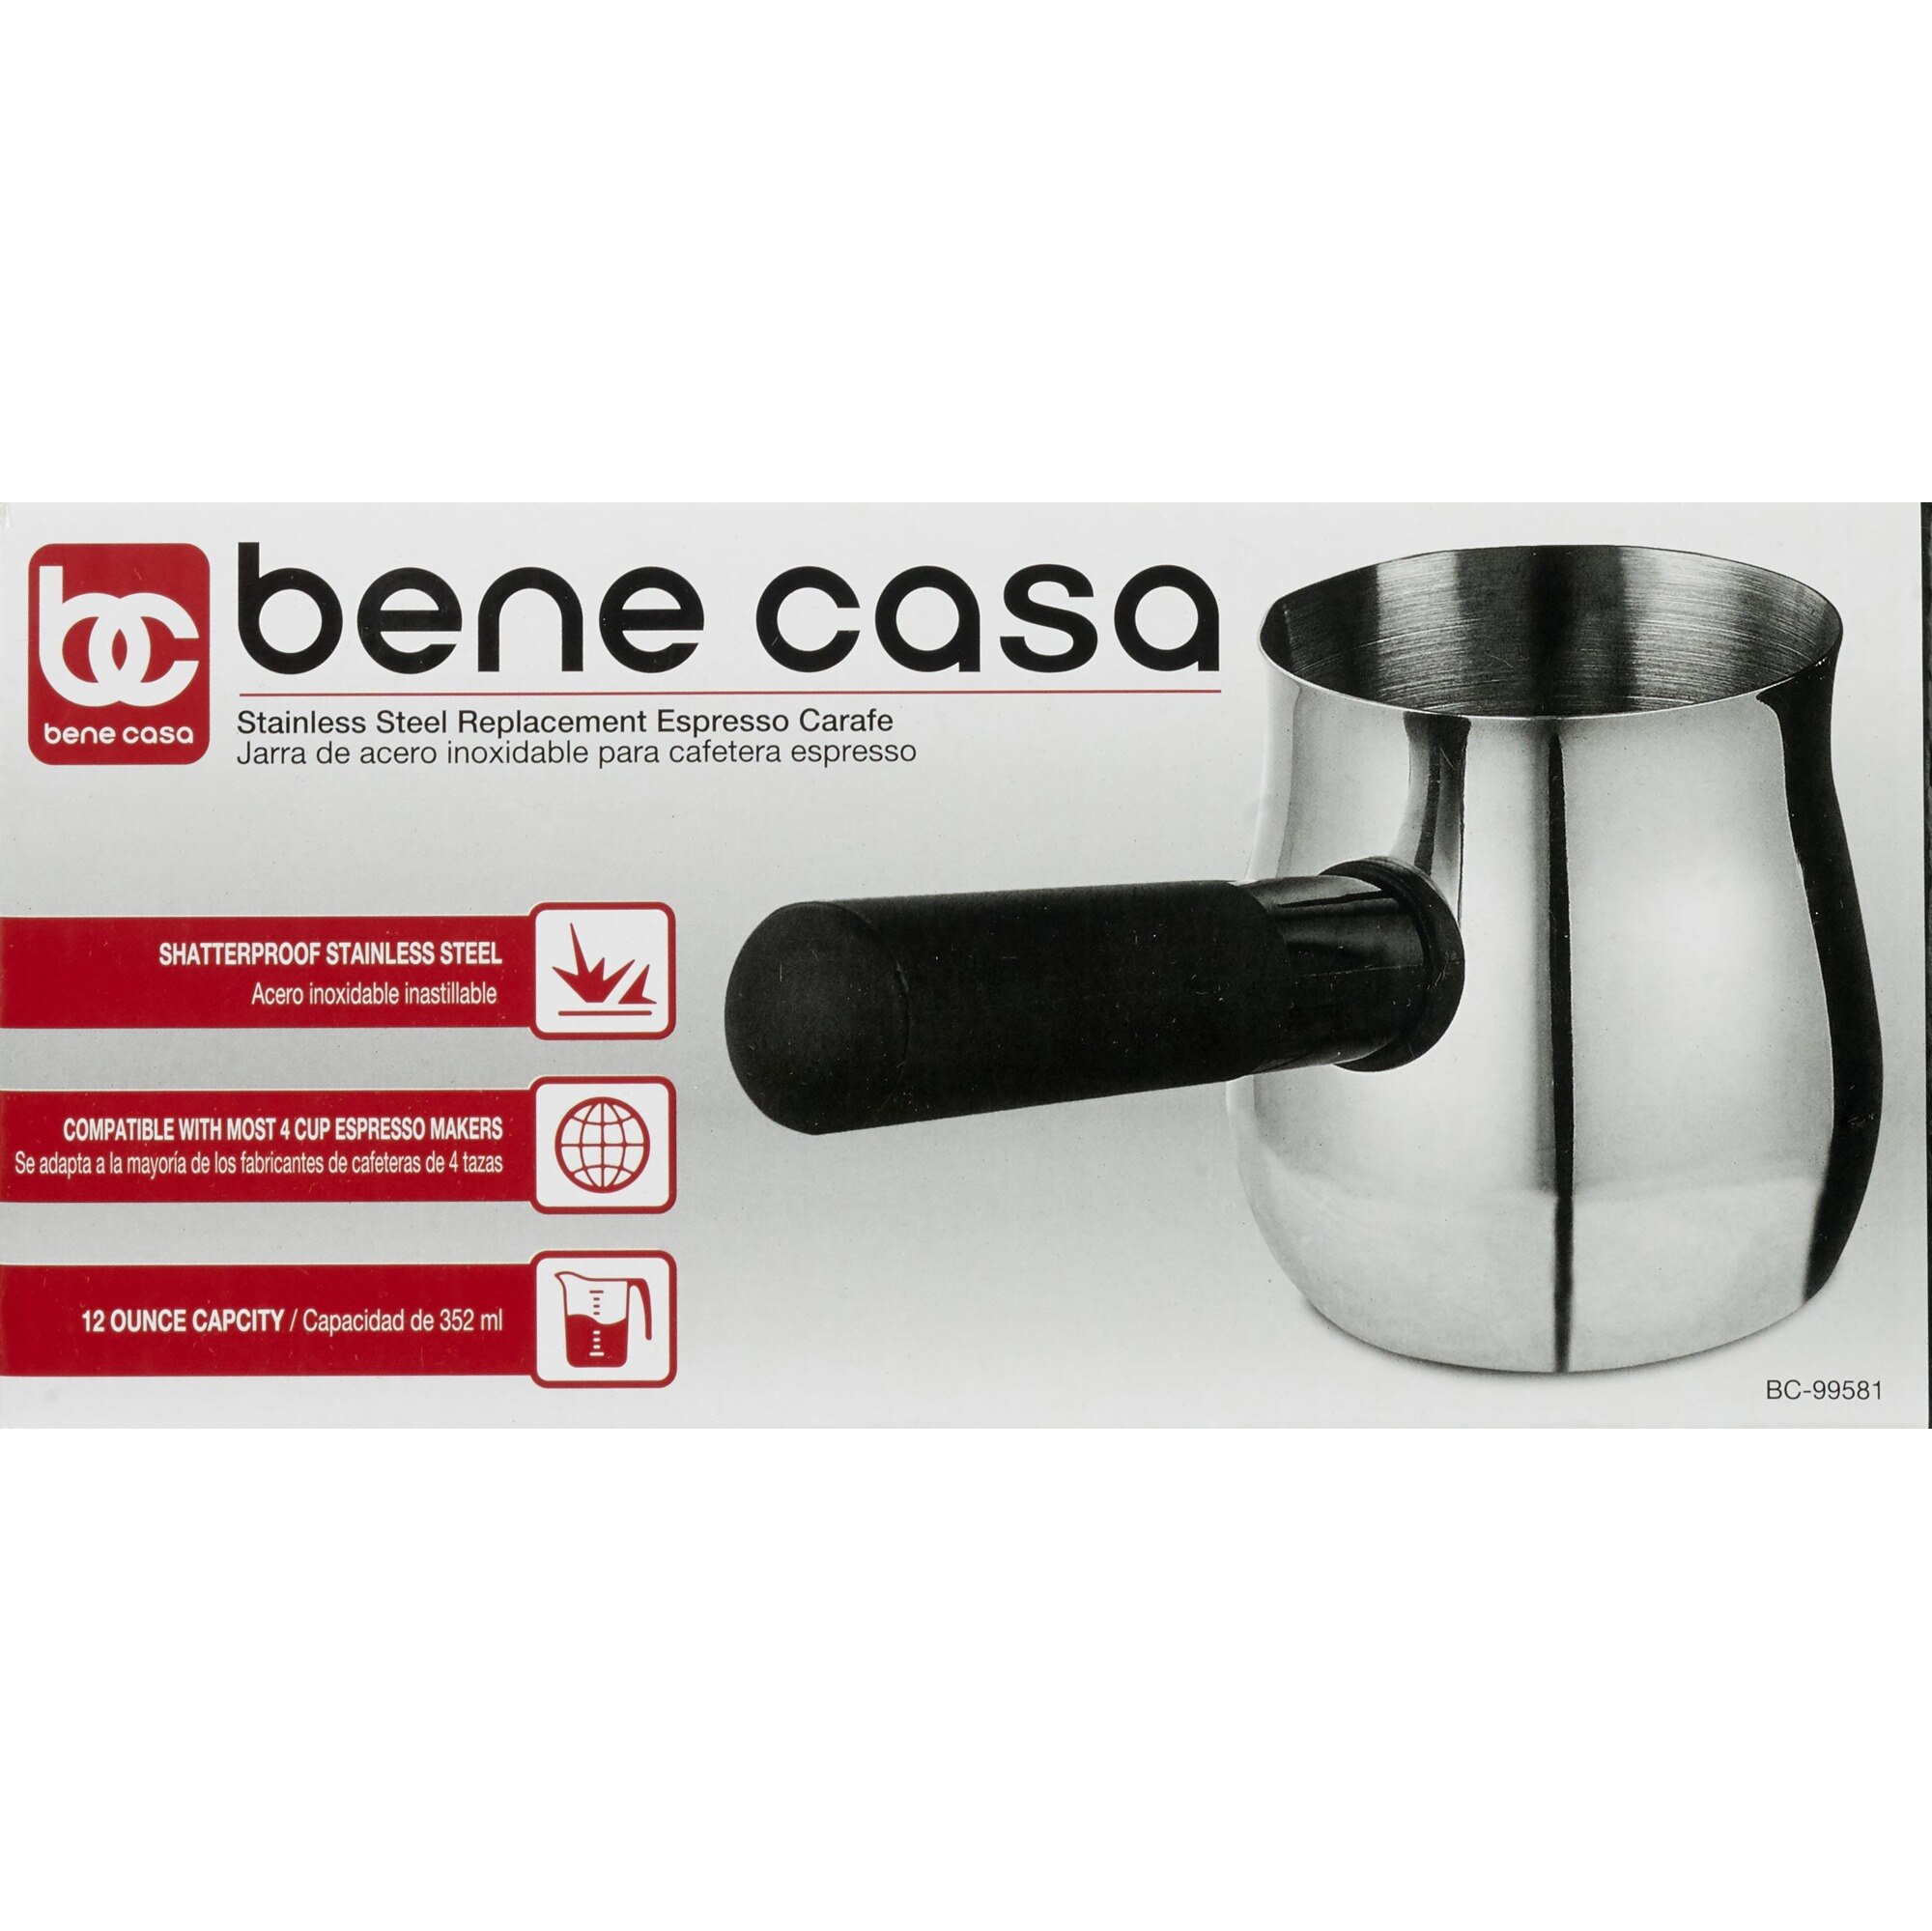 Bene Casa 3 cups Silver Espresso Maker - Total Qty: 1, Count of: 1 - Kroger